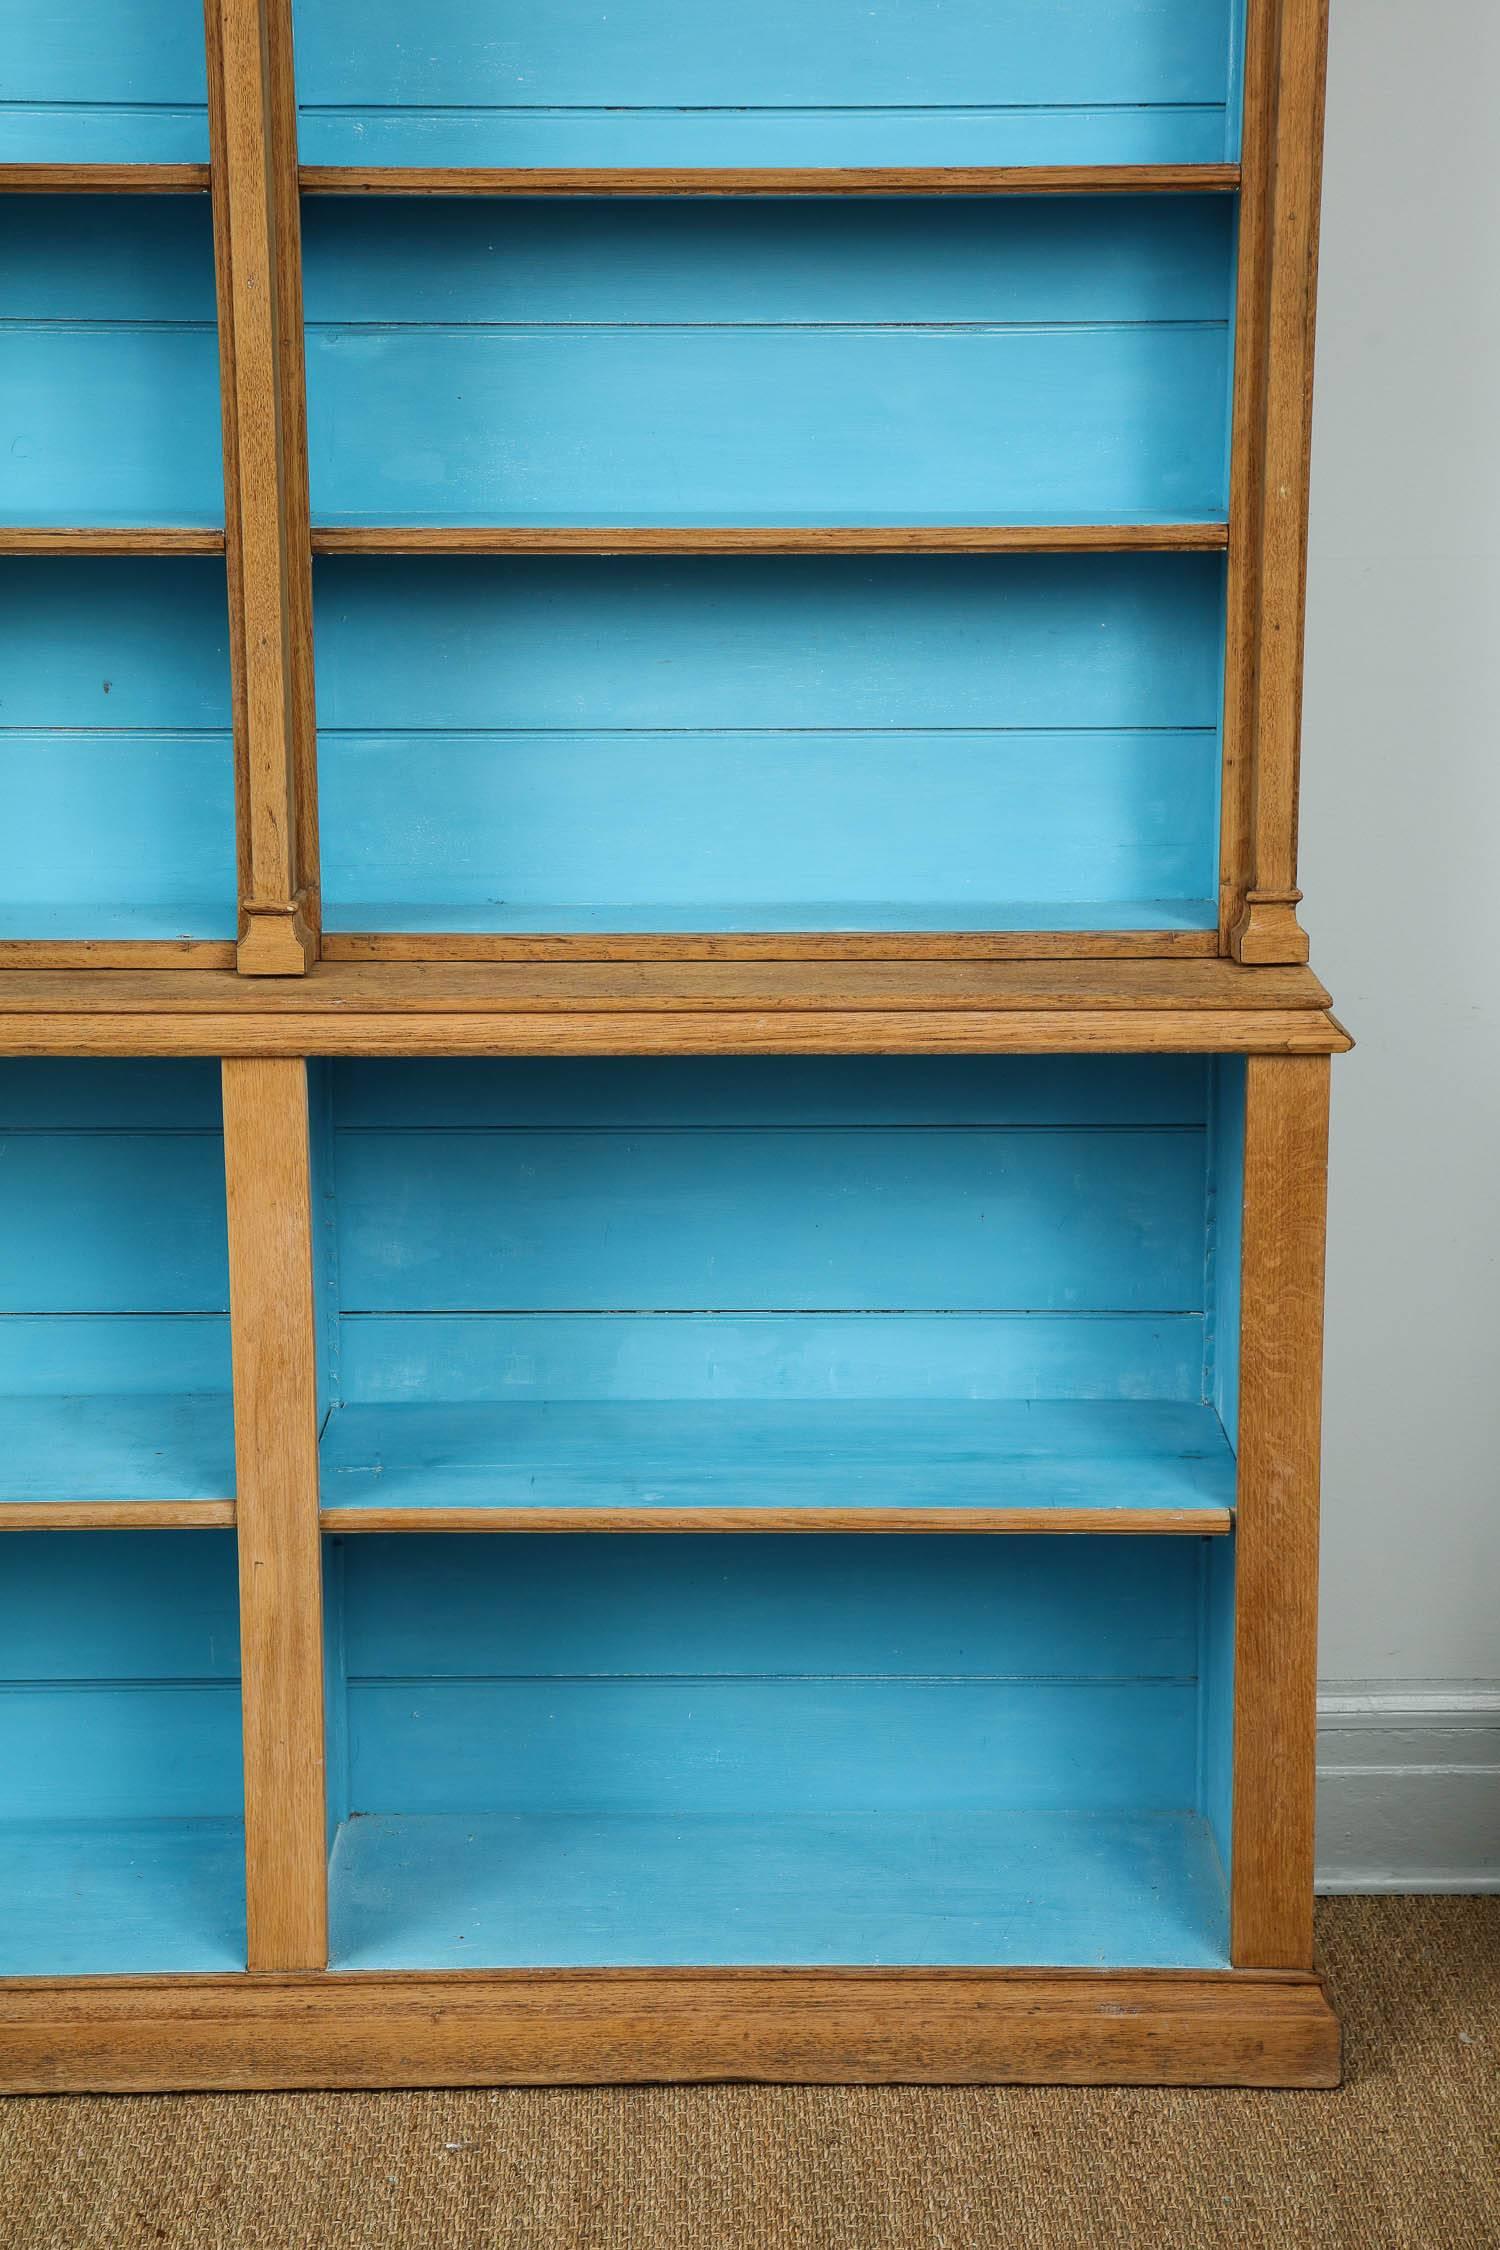 Stripped Oak Reform Movement Bookcase 1